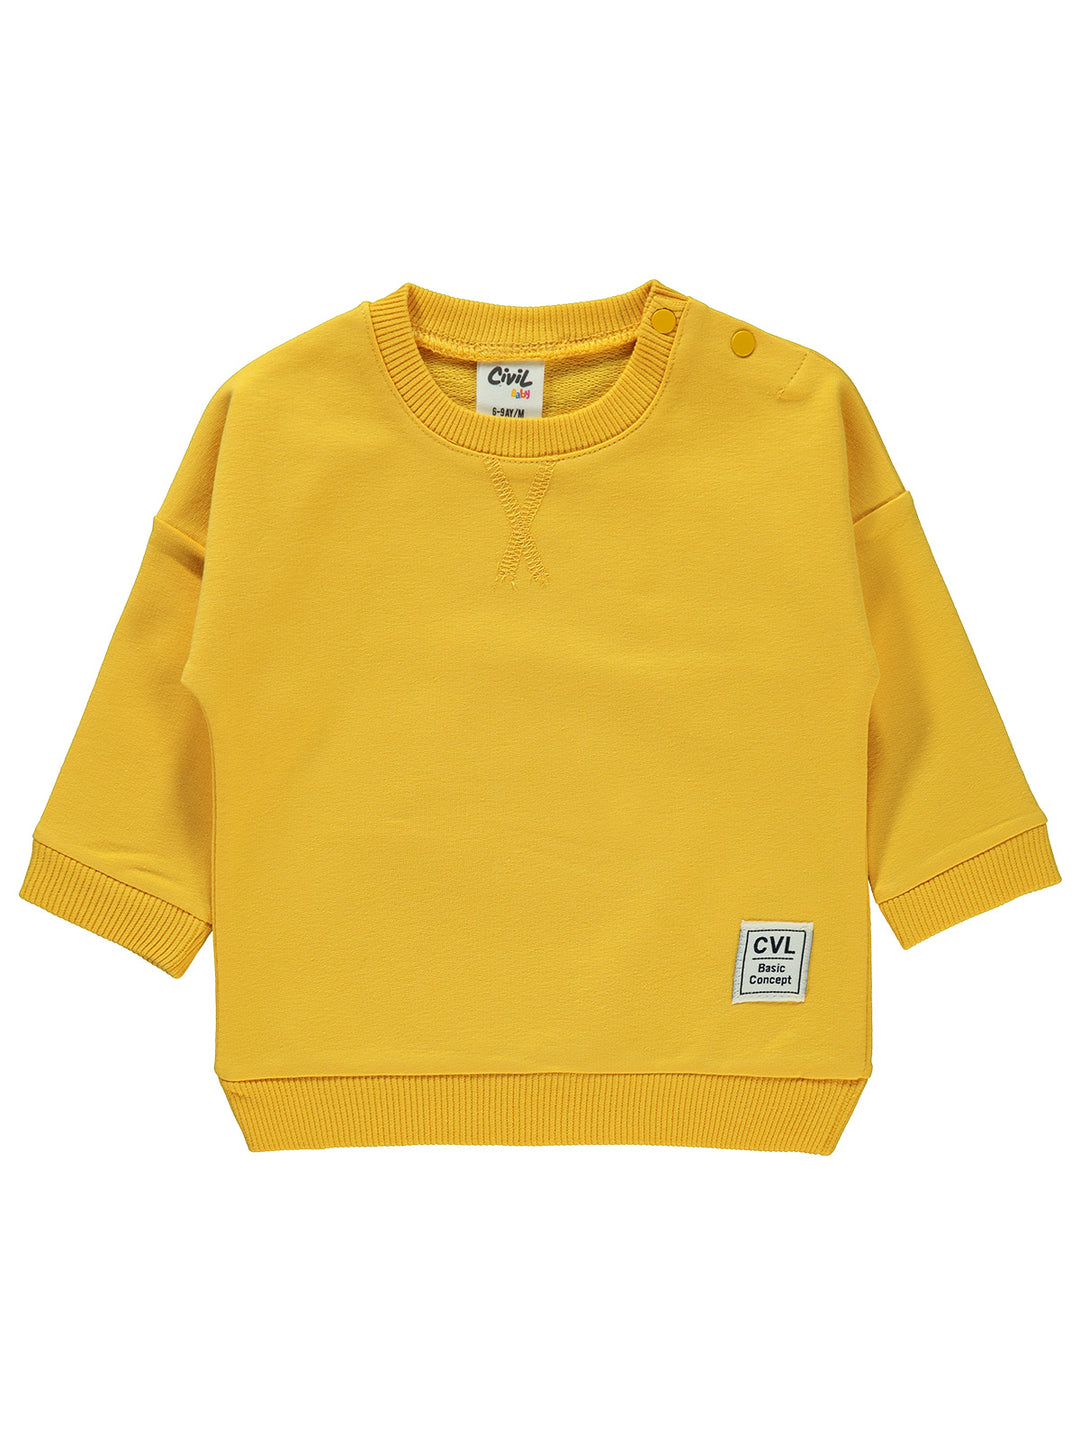 Civil Baby L/S Sweat Shirt Cotton #E425 (W-22)